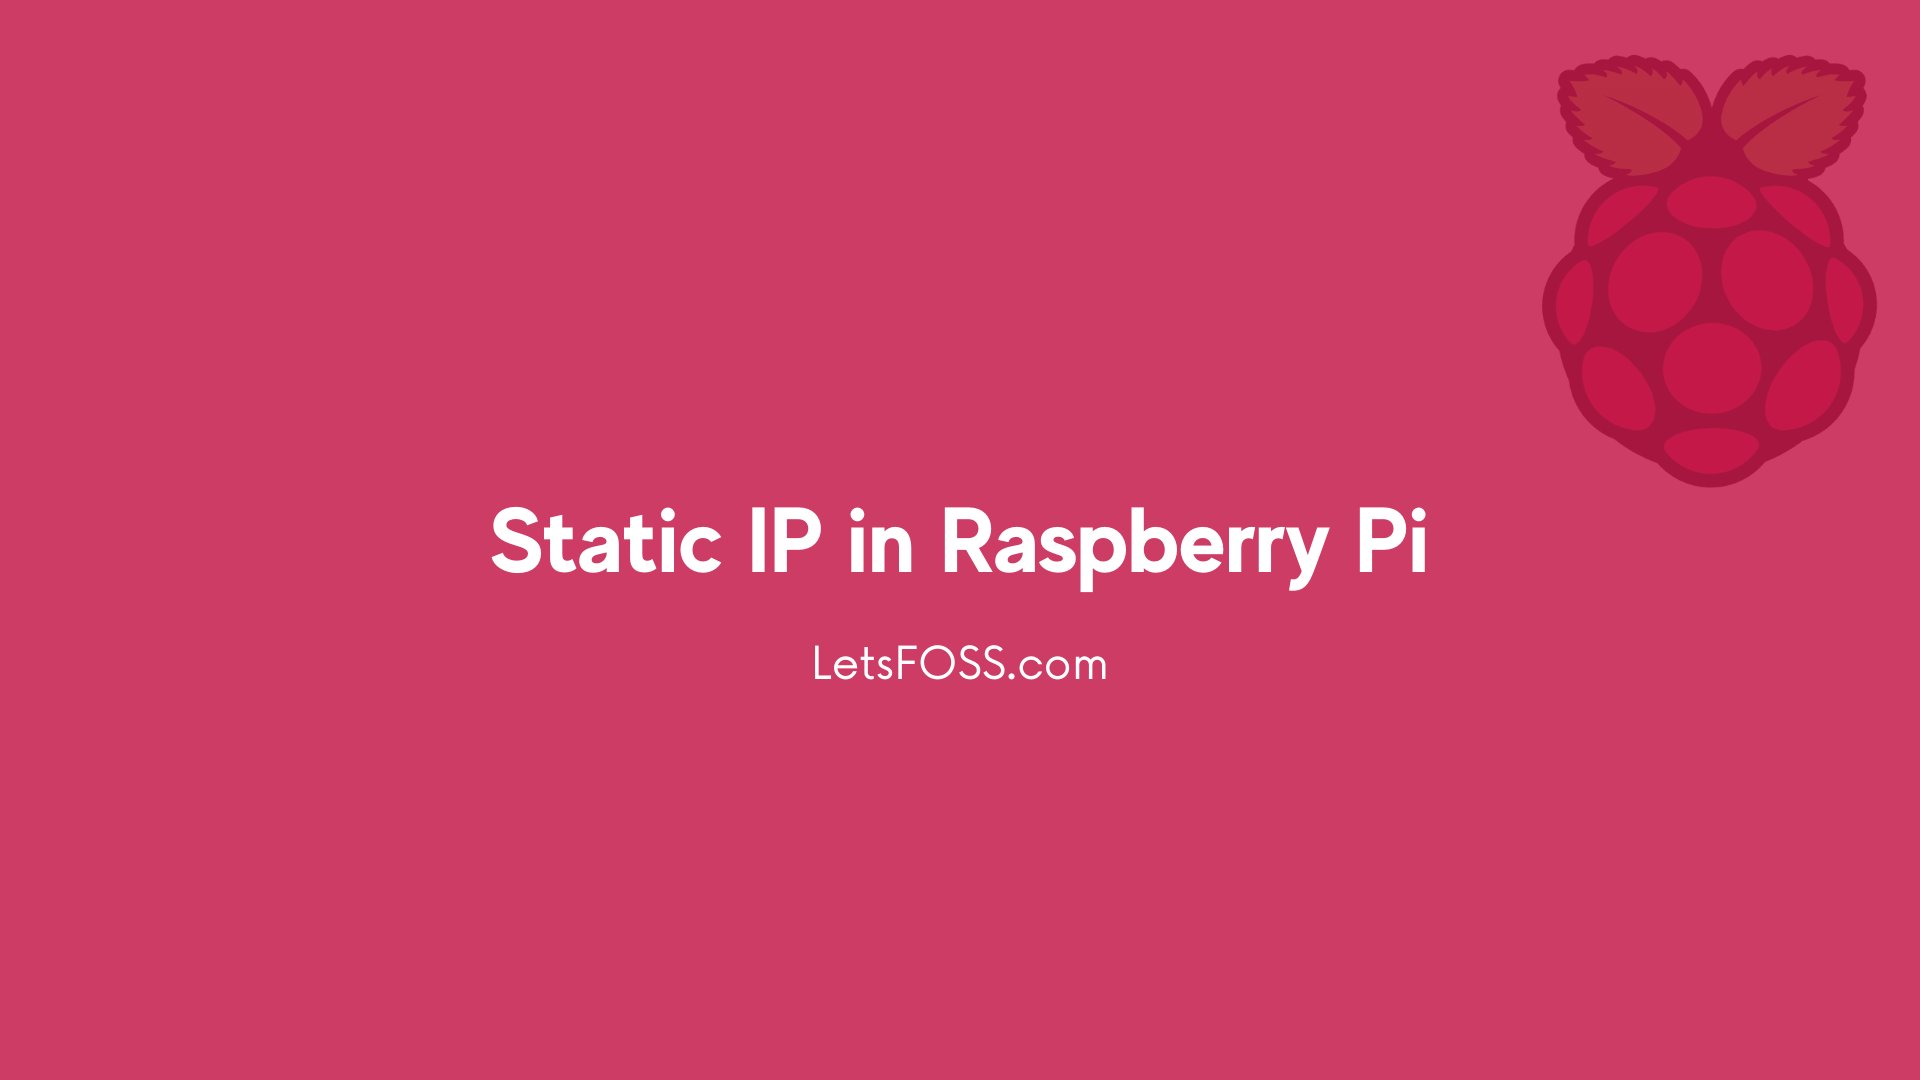 Setting up Static IP in Raspberry Pi